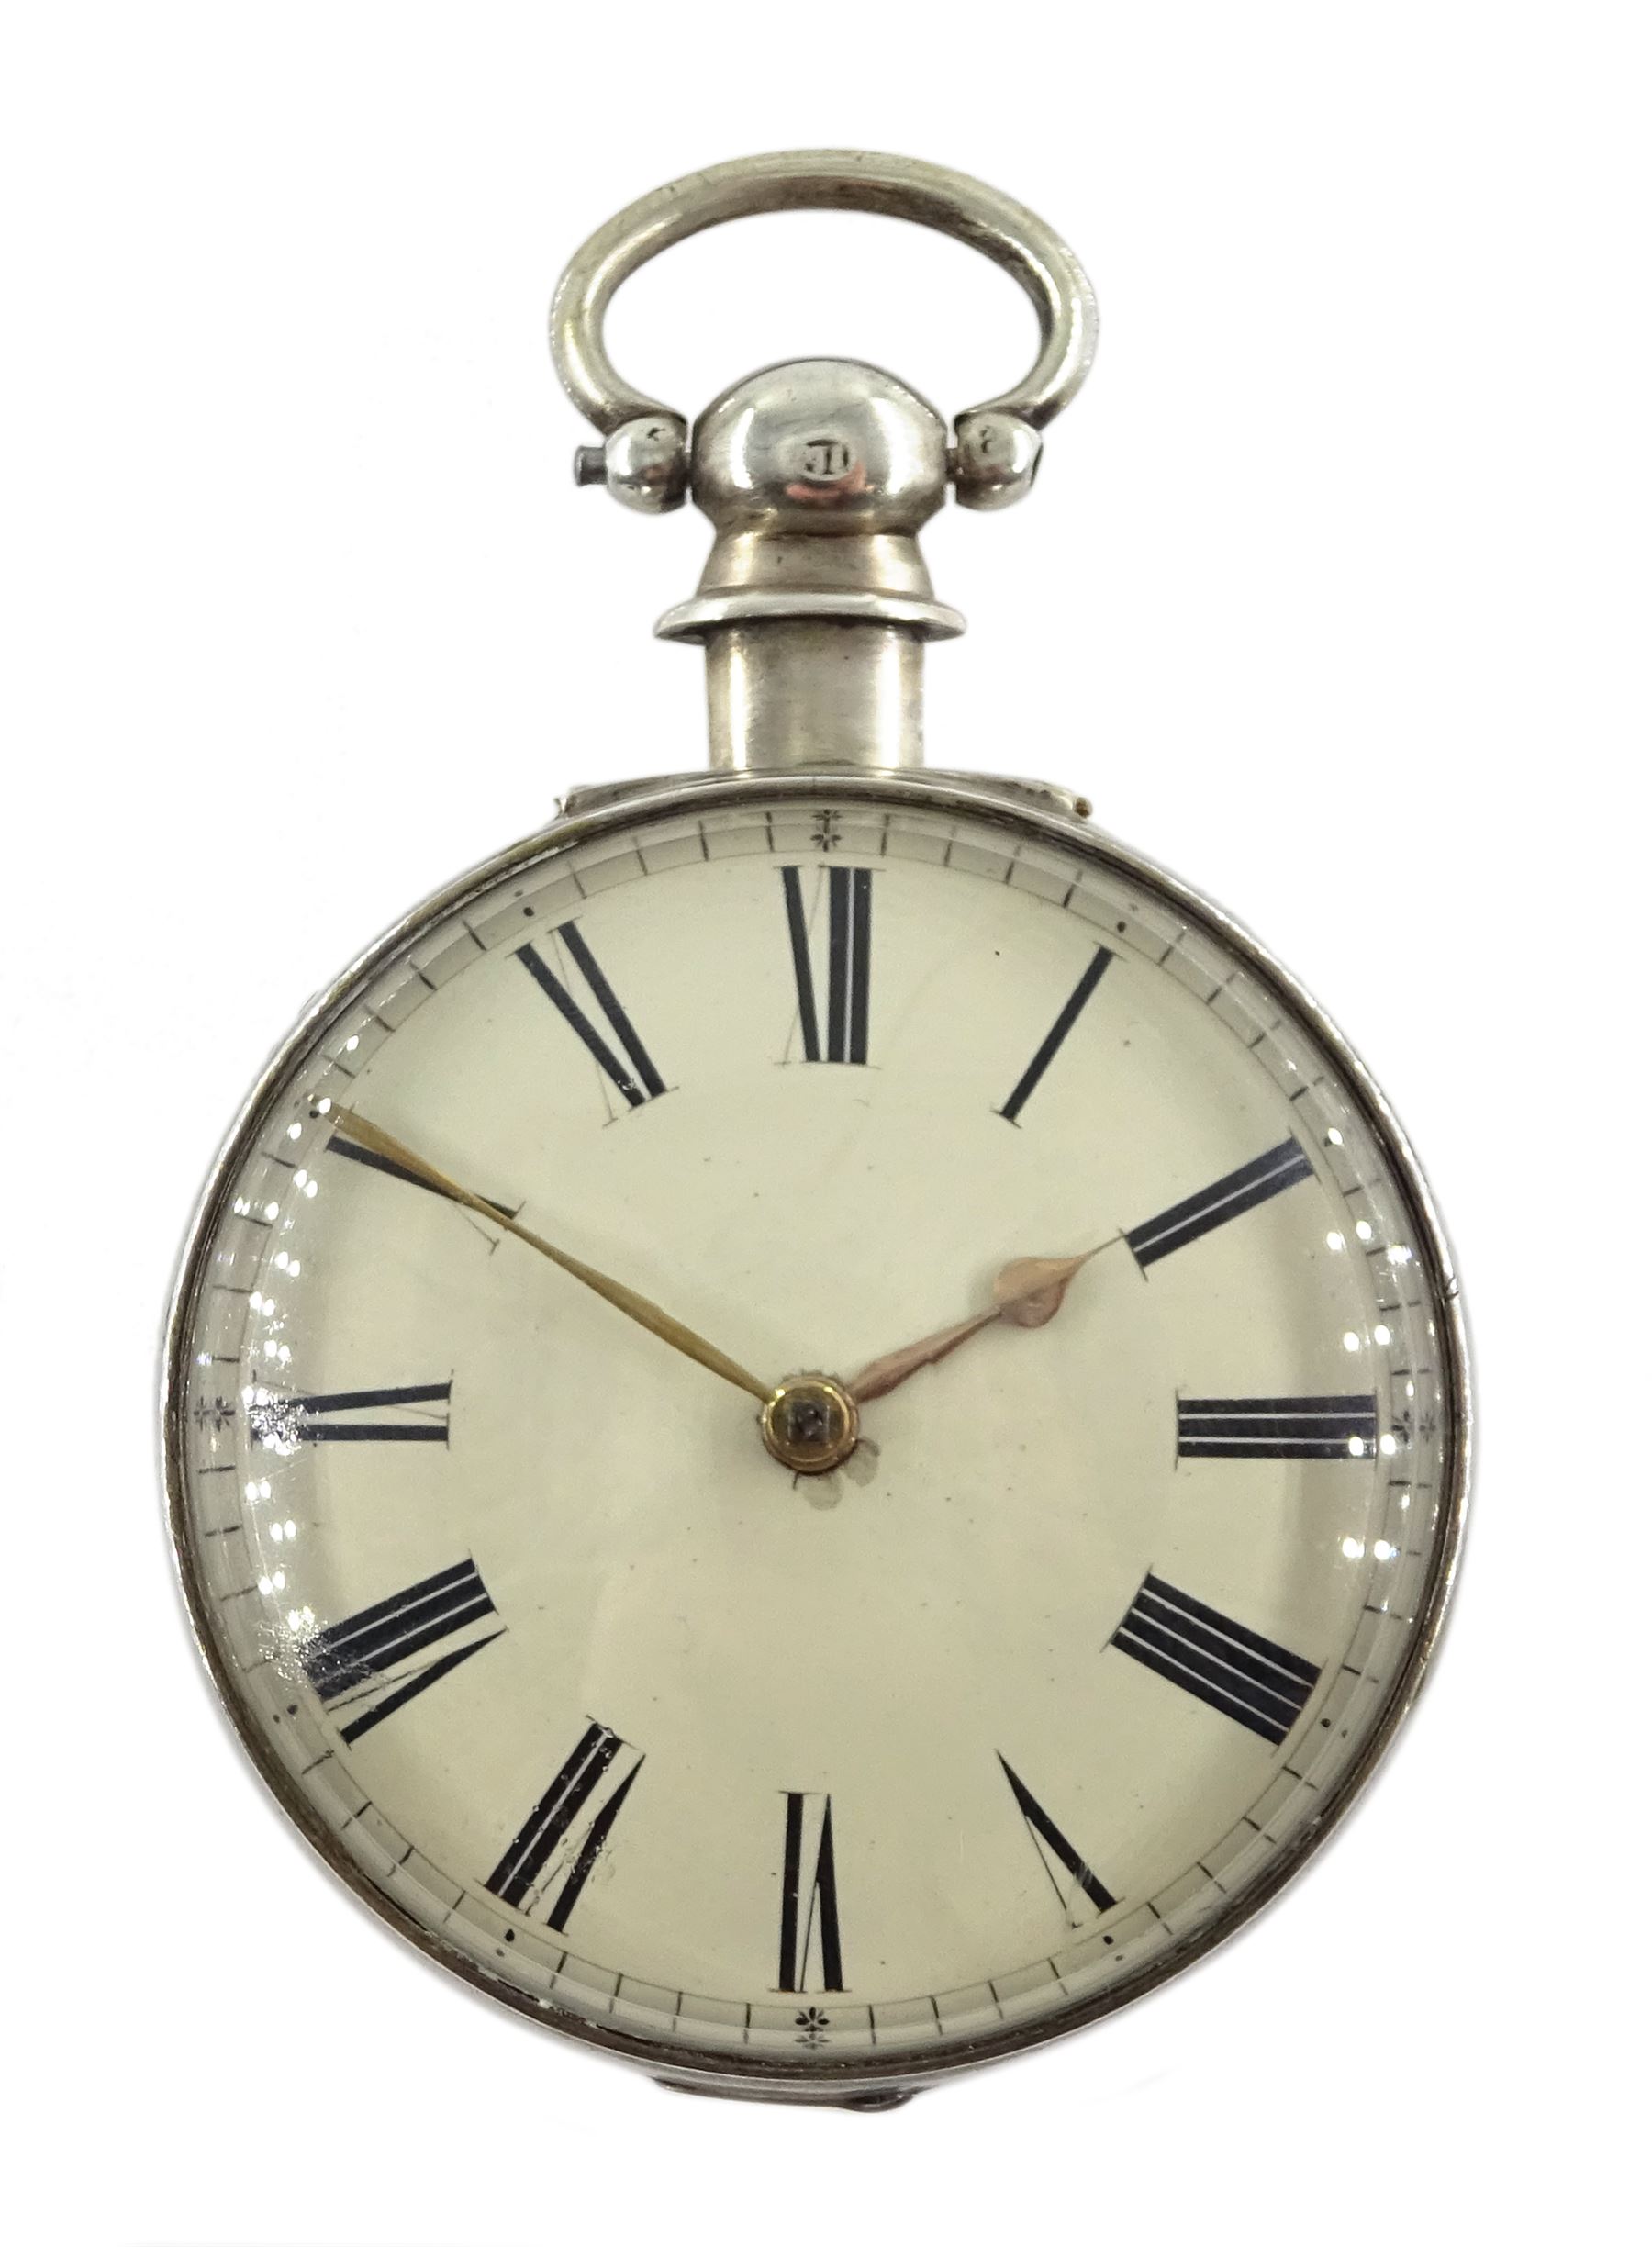 Victorian silver pair cased pocket watch by William Smith, Huddersfield, No. 533, round pillars, pie - Image 6 of 7